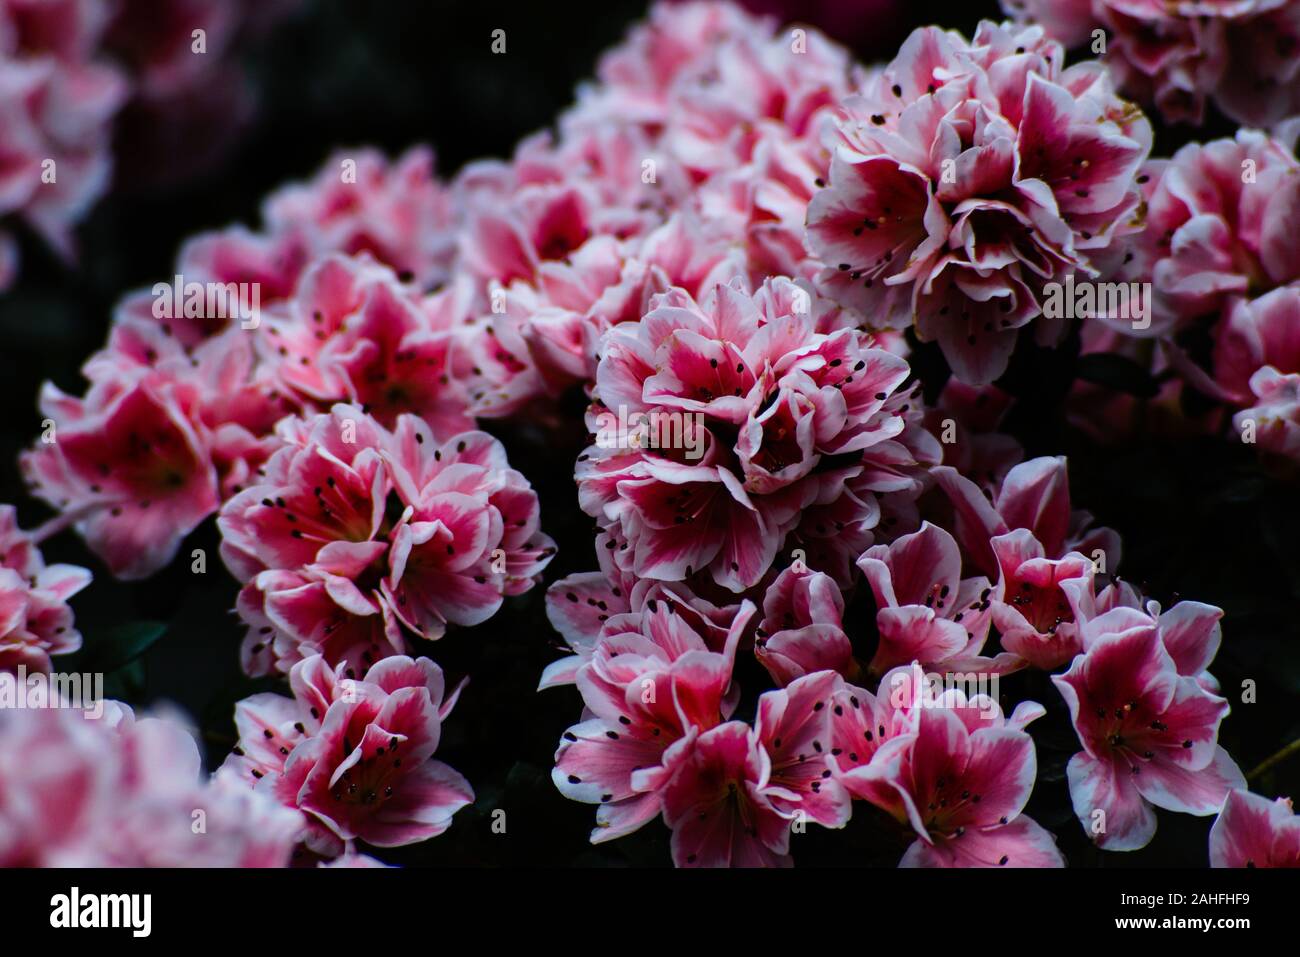 Pink and white azalea flowers against dark background Stock Photo